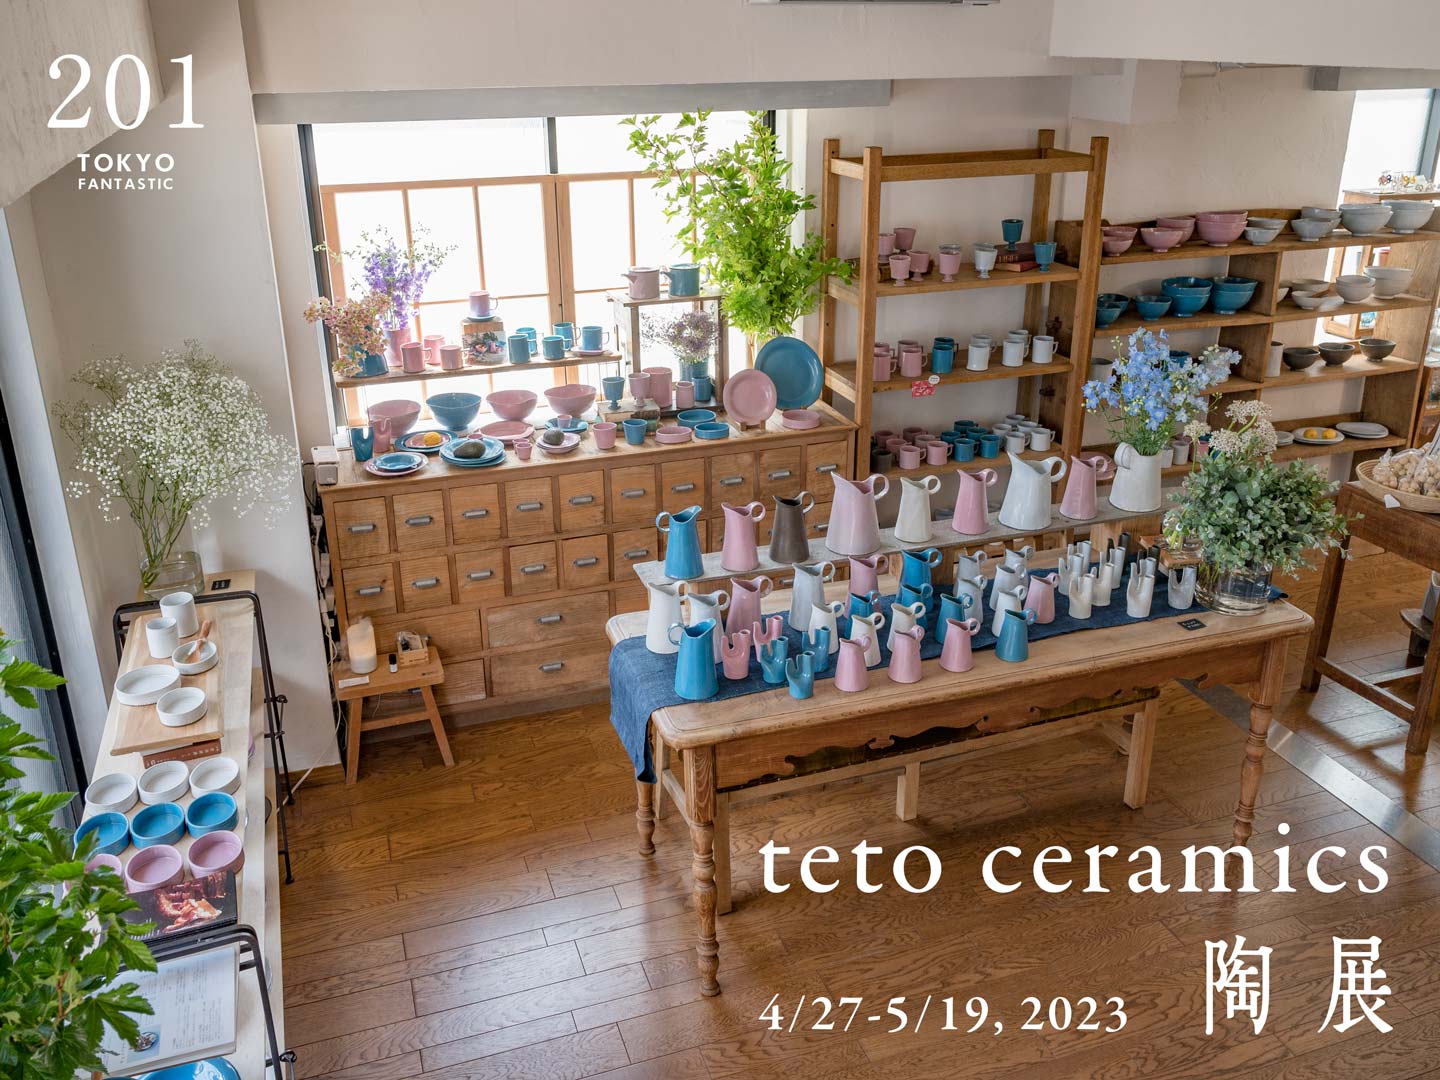 teto ceramics 陶展 4/27-5/19, 2023【TOKYO FANTASTIC 201】